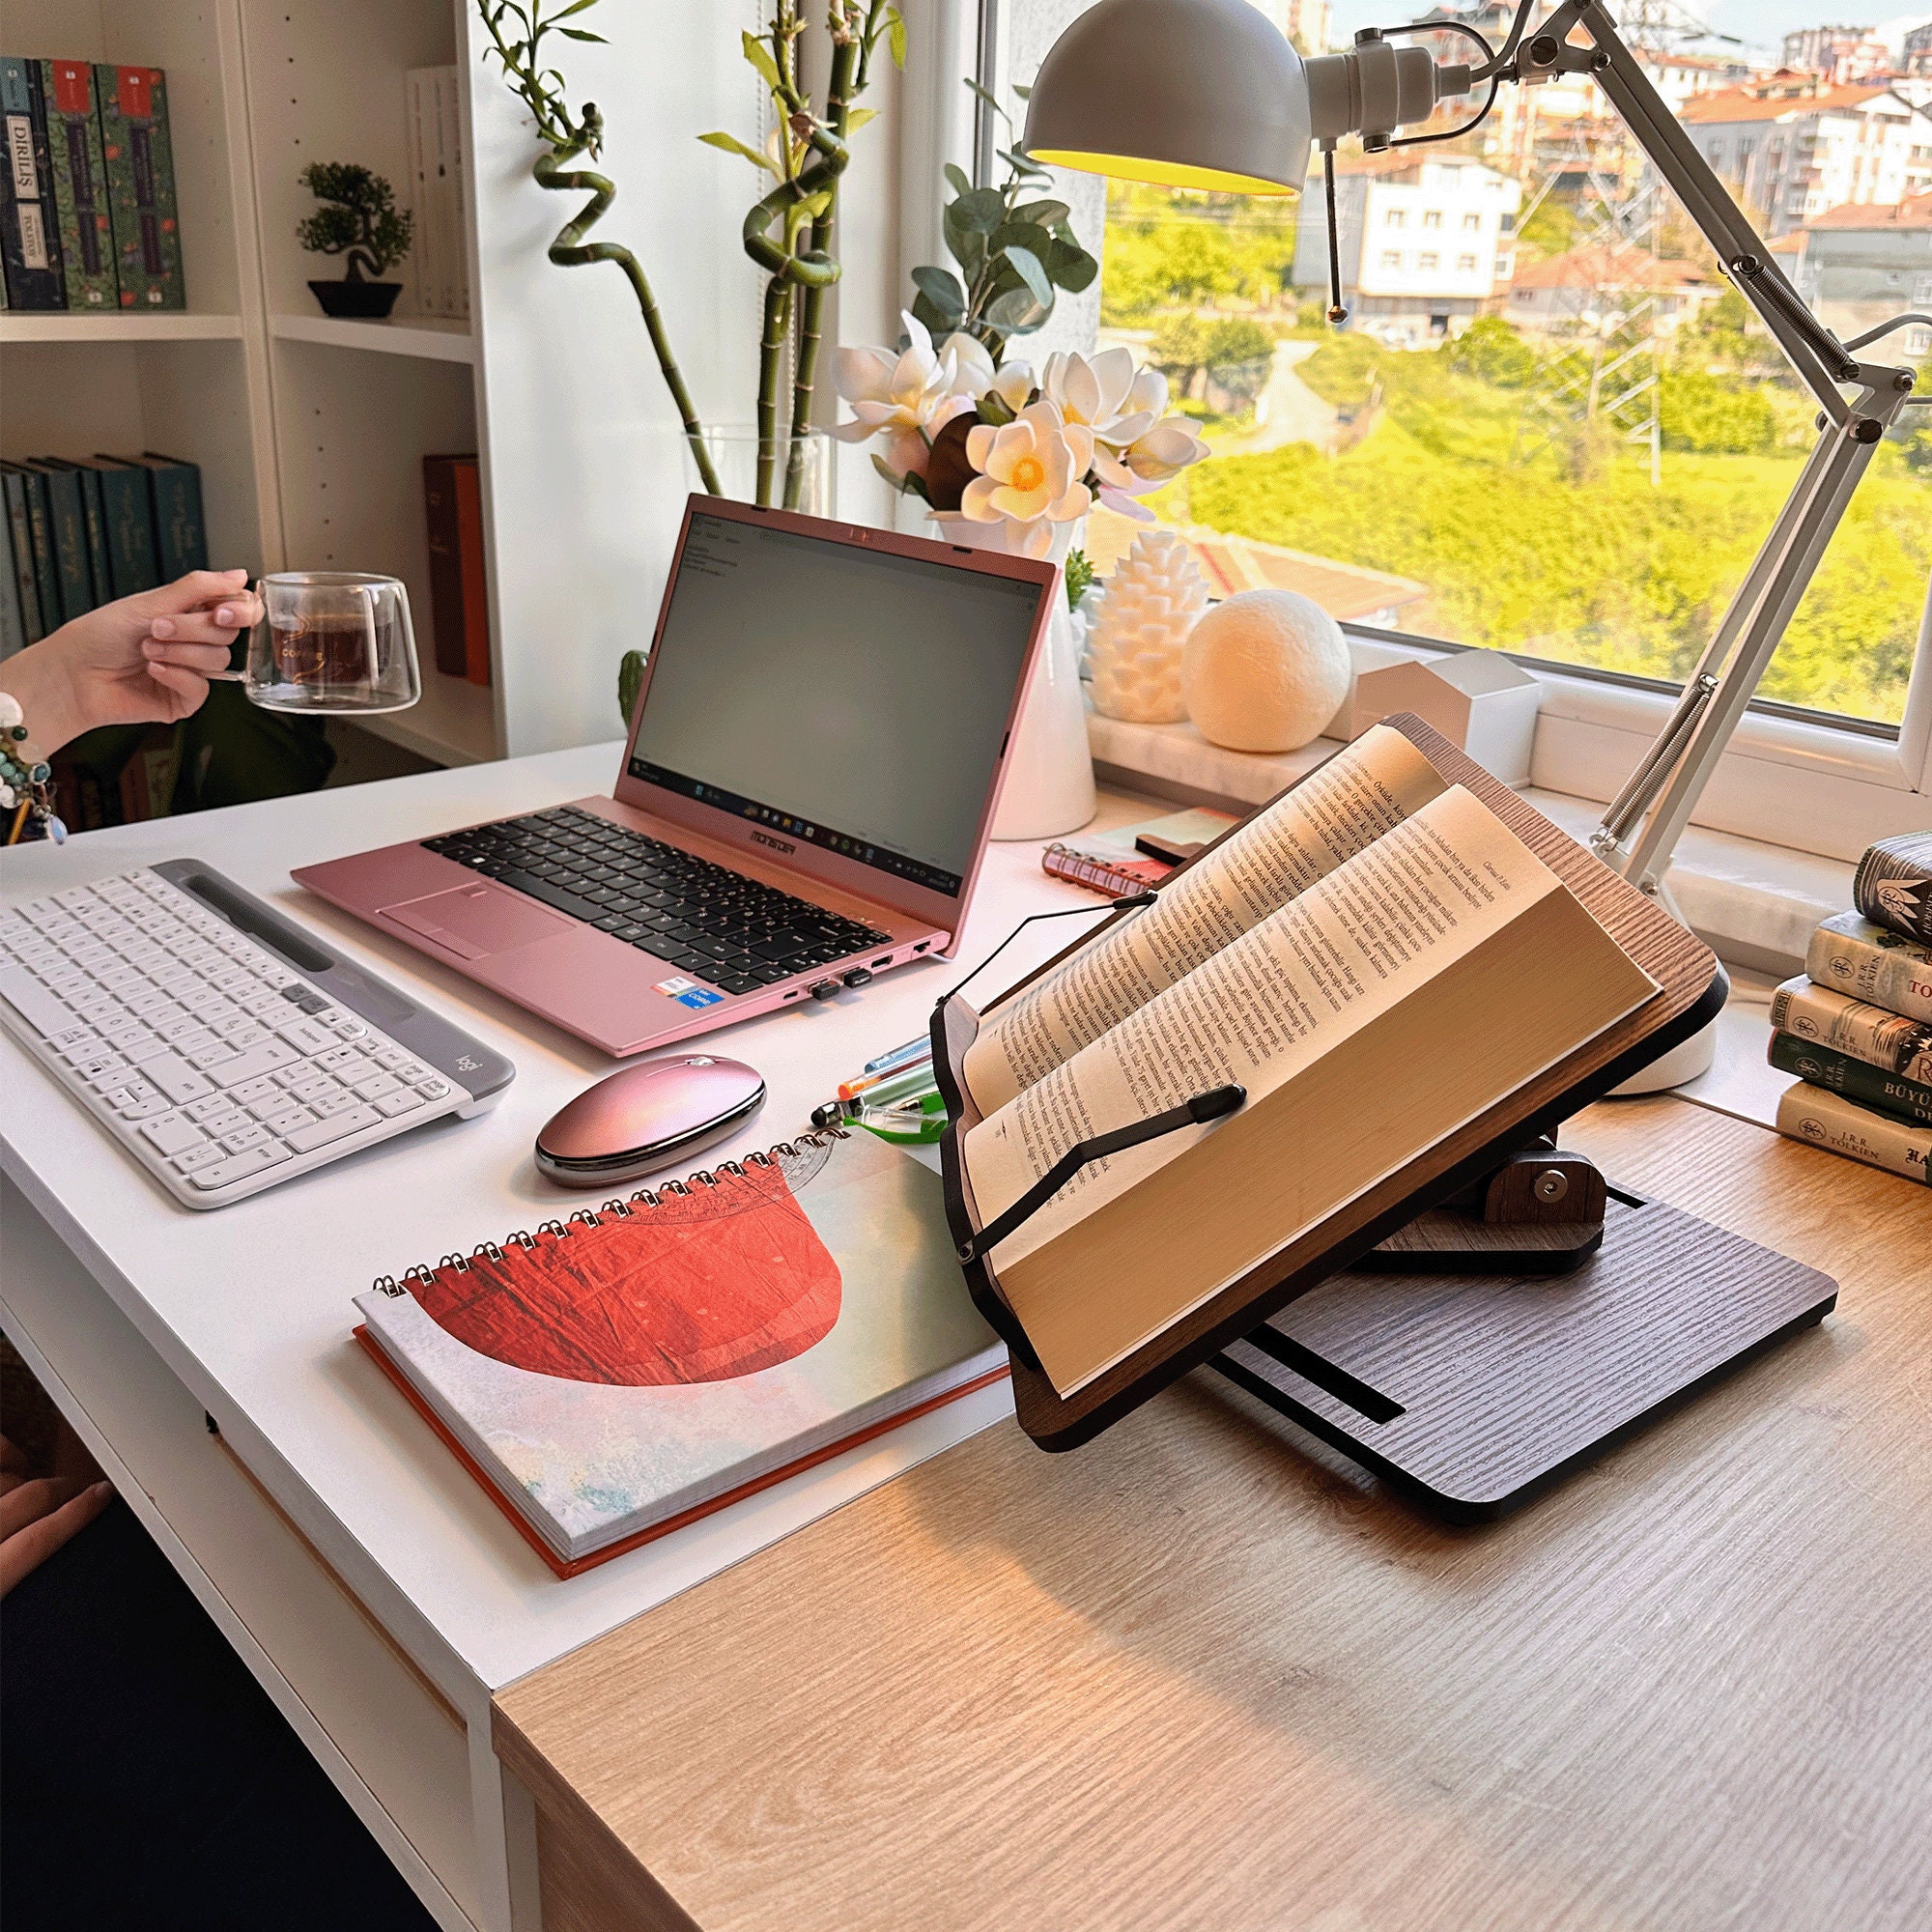 360 Degree Adjustable Wooden Book Stand & Laptop Stand, Cookbook Holder,  Best Reading Gift, Office Desk Setup, Work From Home, Laptop Holder 